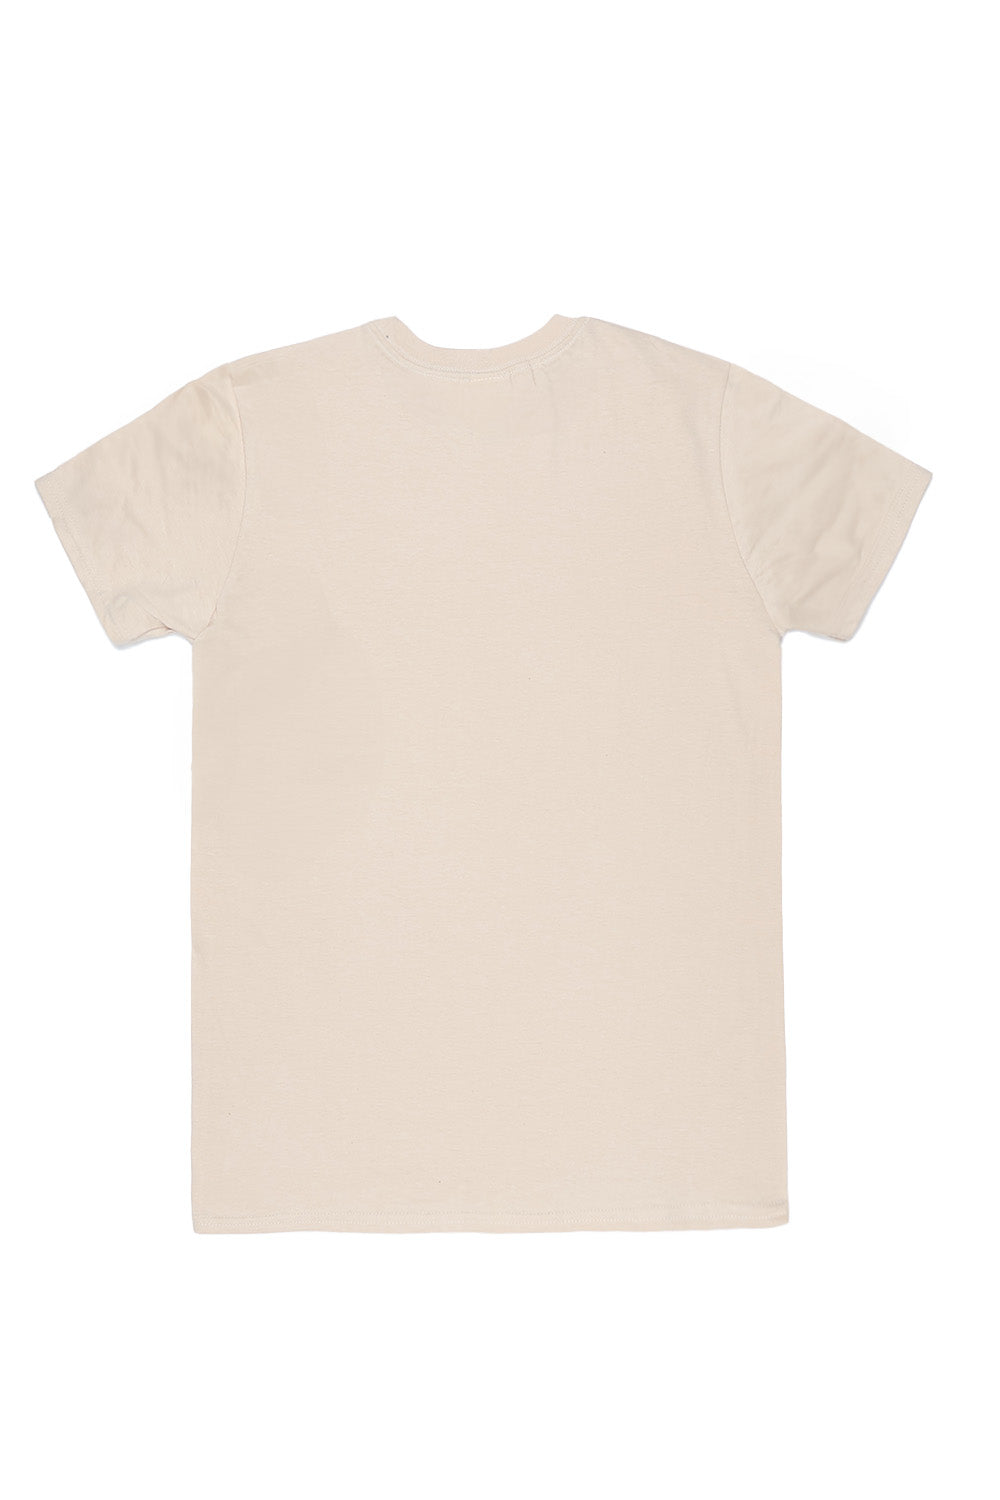 Softstyle Plain T-Shirt in Sand (Custom Pack)